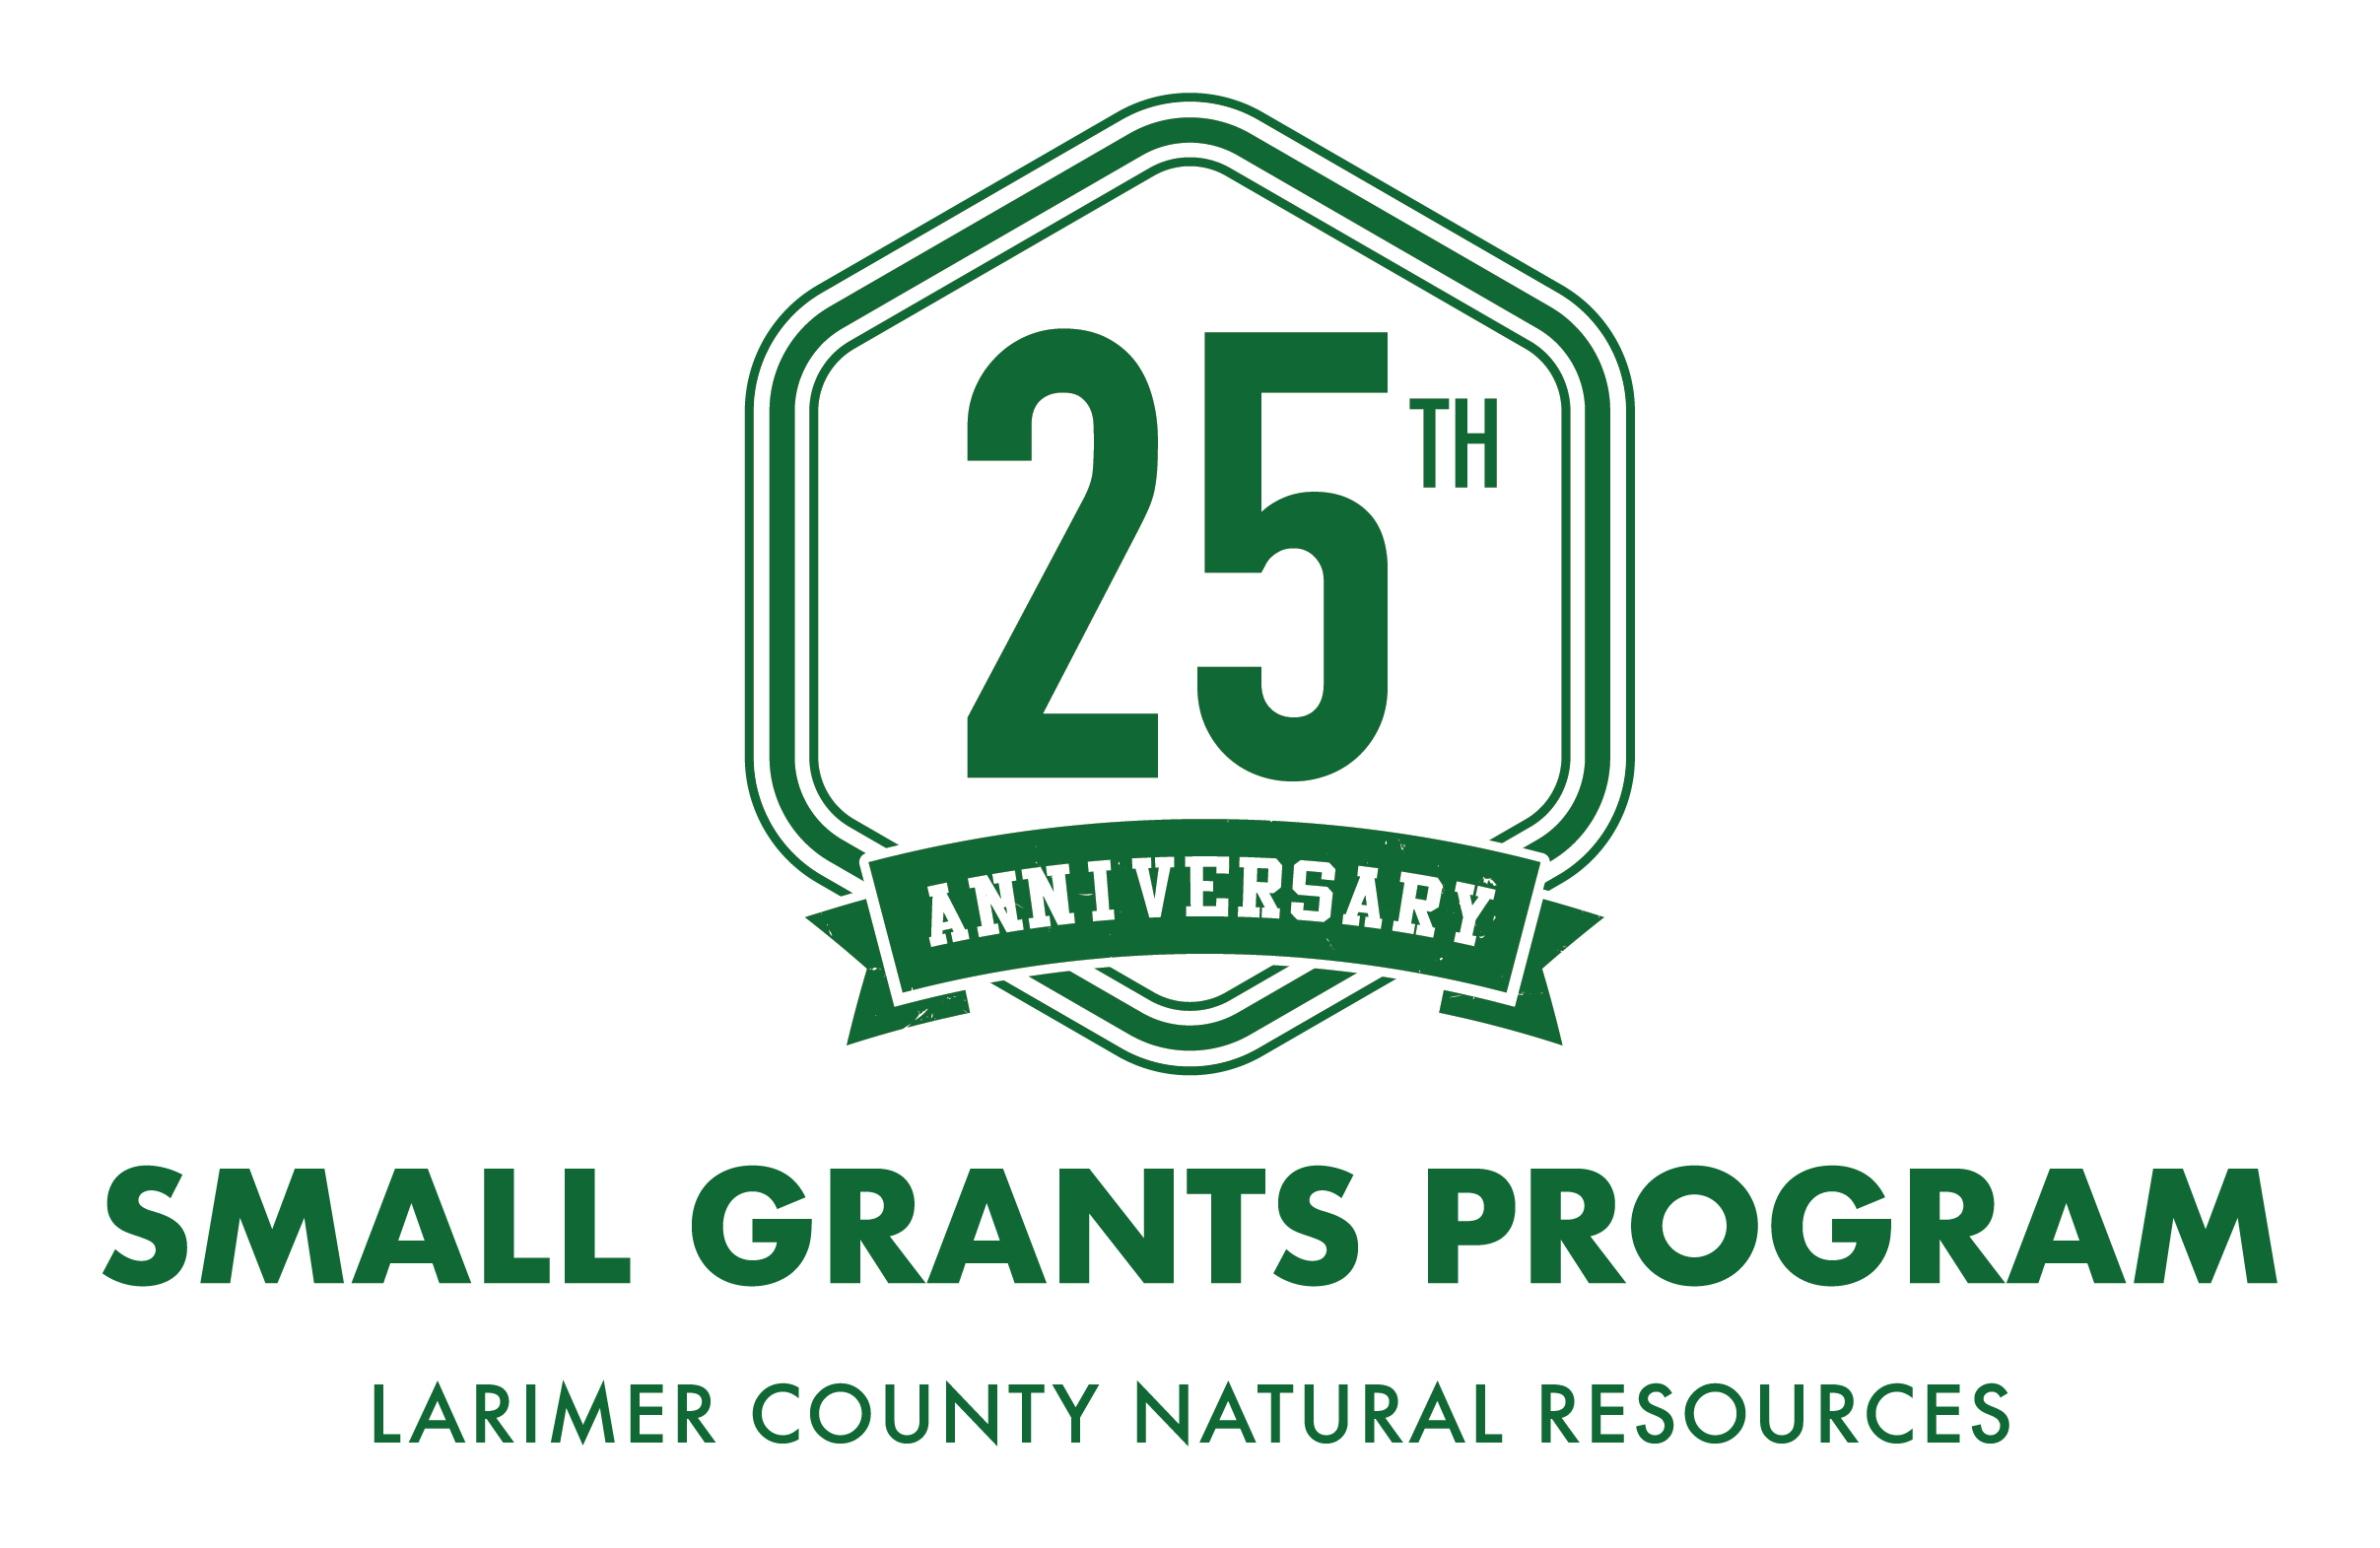 Image 1: 25th Anniversary of Small Grants Program LCDNR